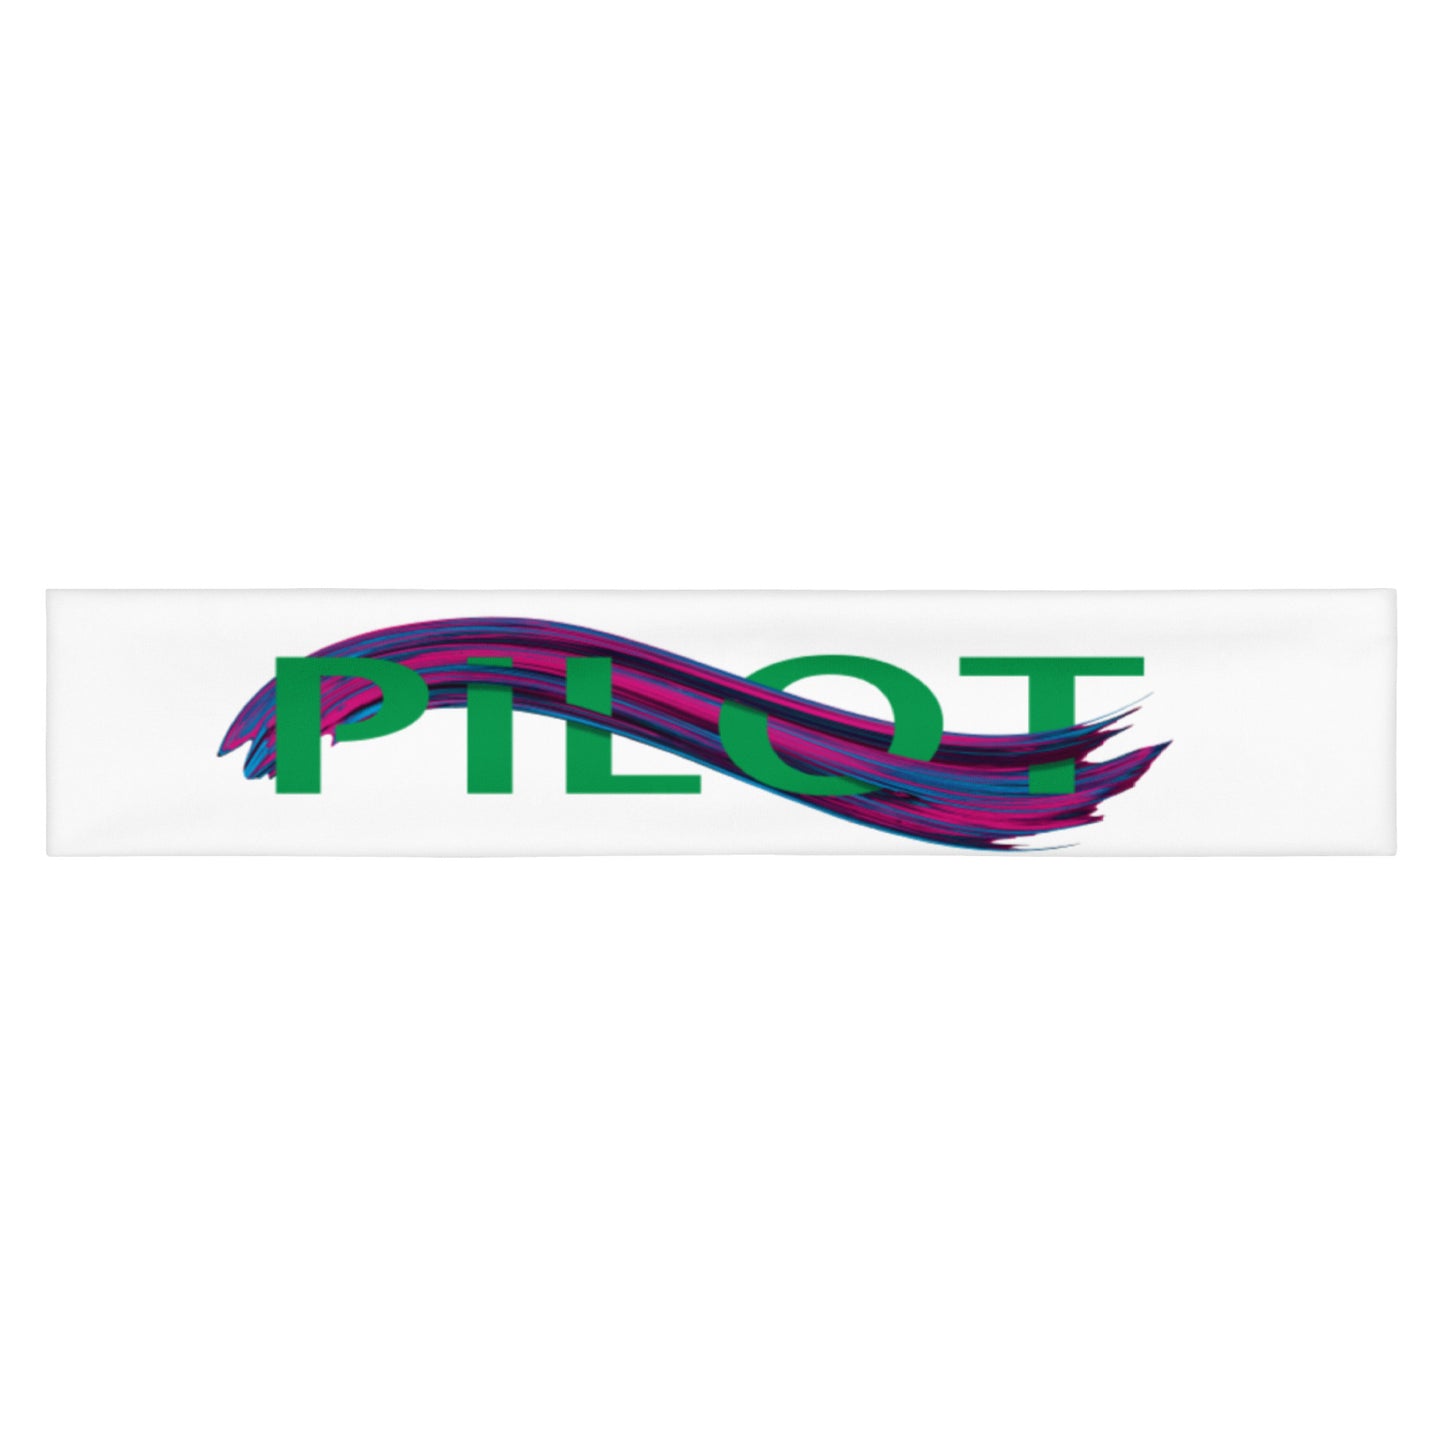 Pilot - headband (green/purple)